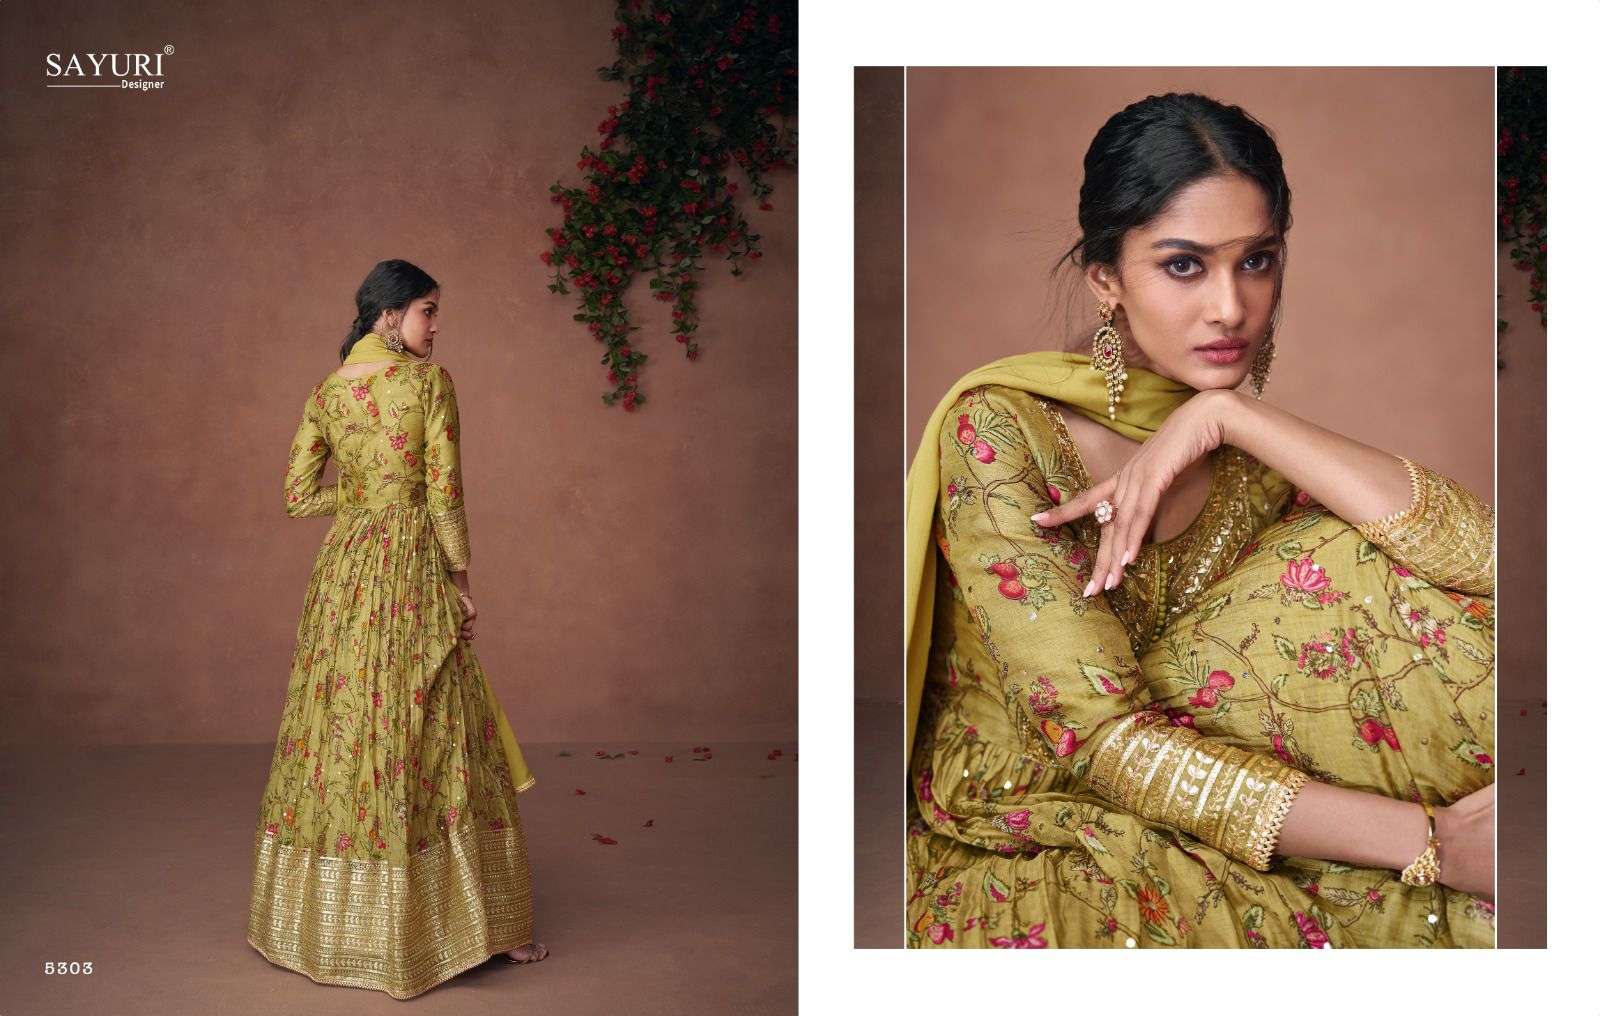 sayuri designer nooriat 5300-5304 series latest readymade partywear salwar kameez wholesaler surat gujarat